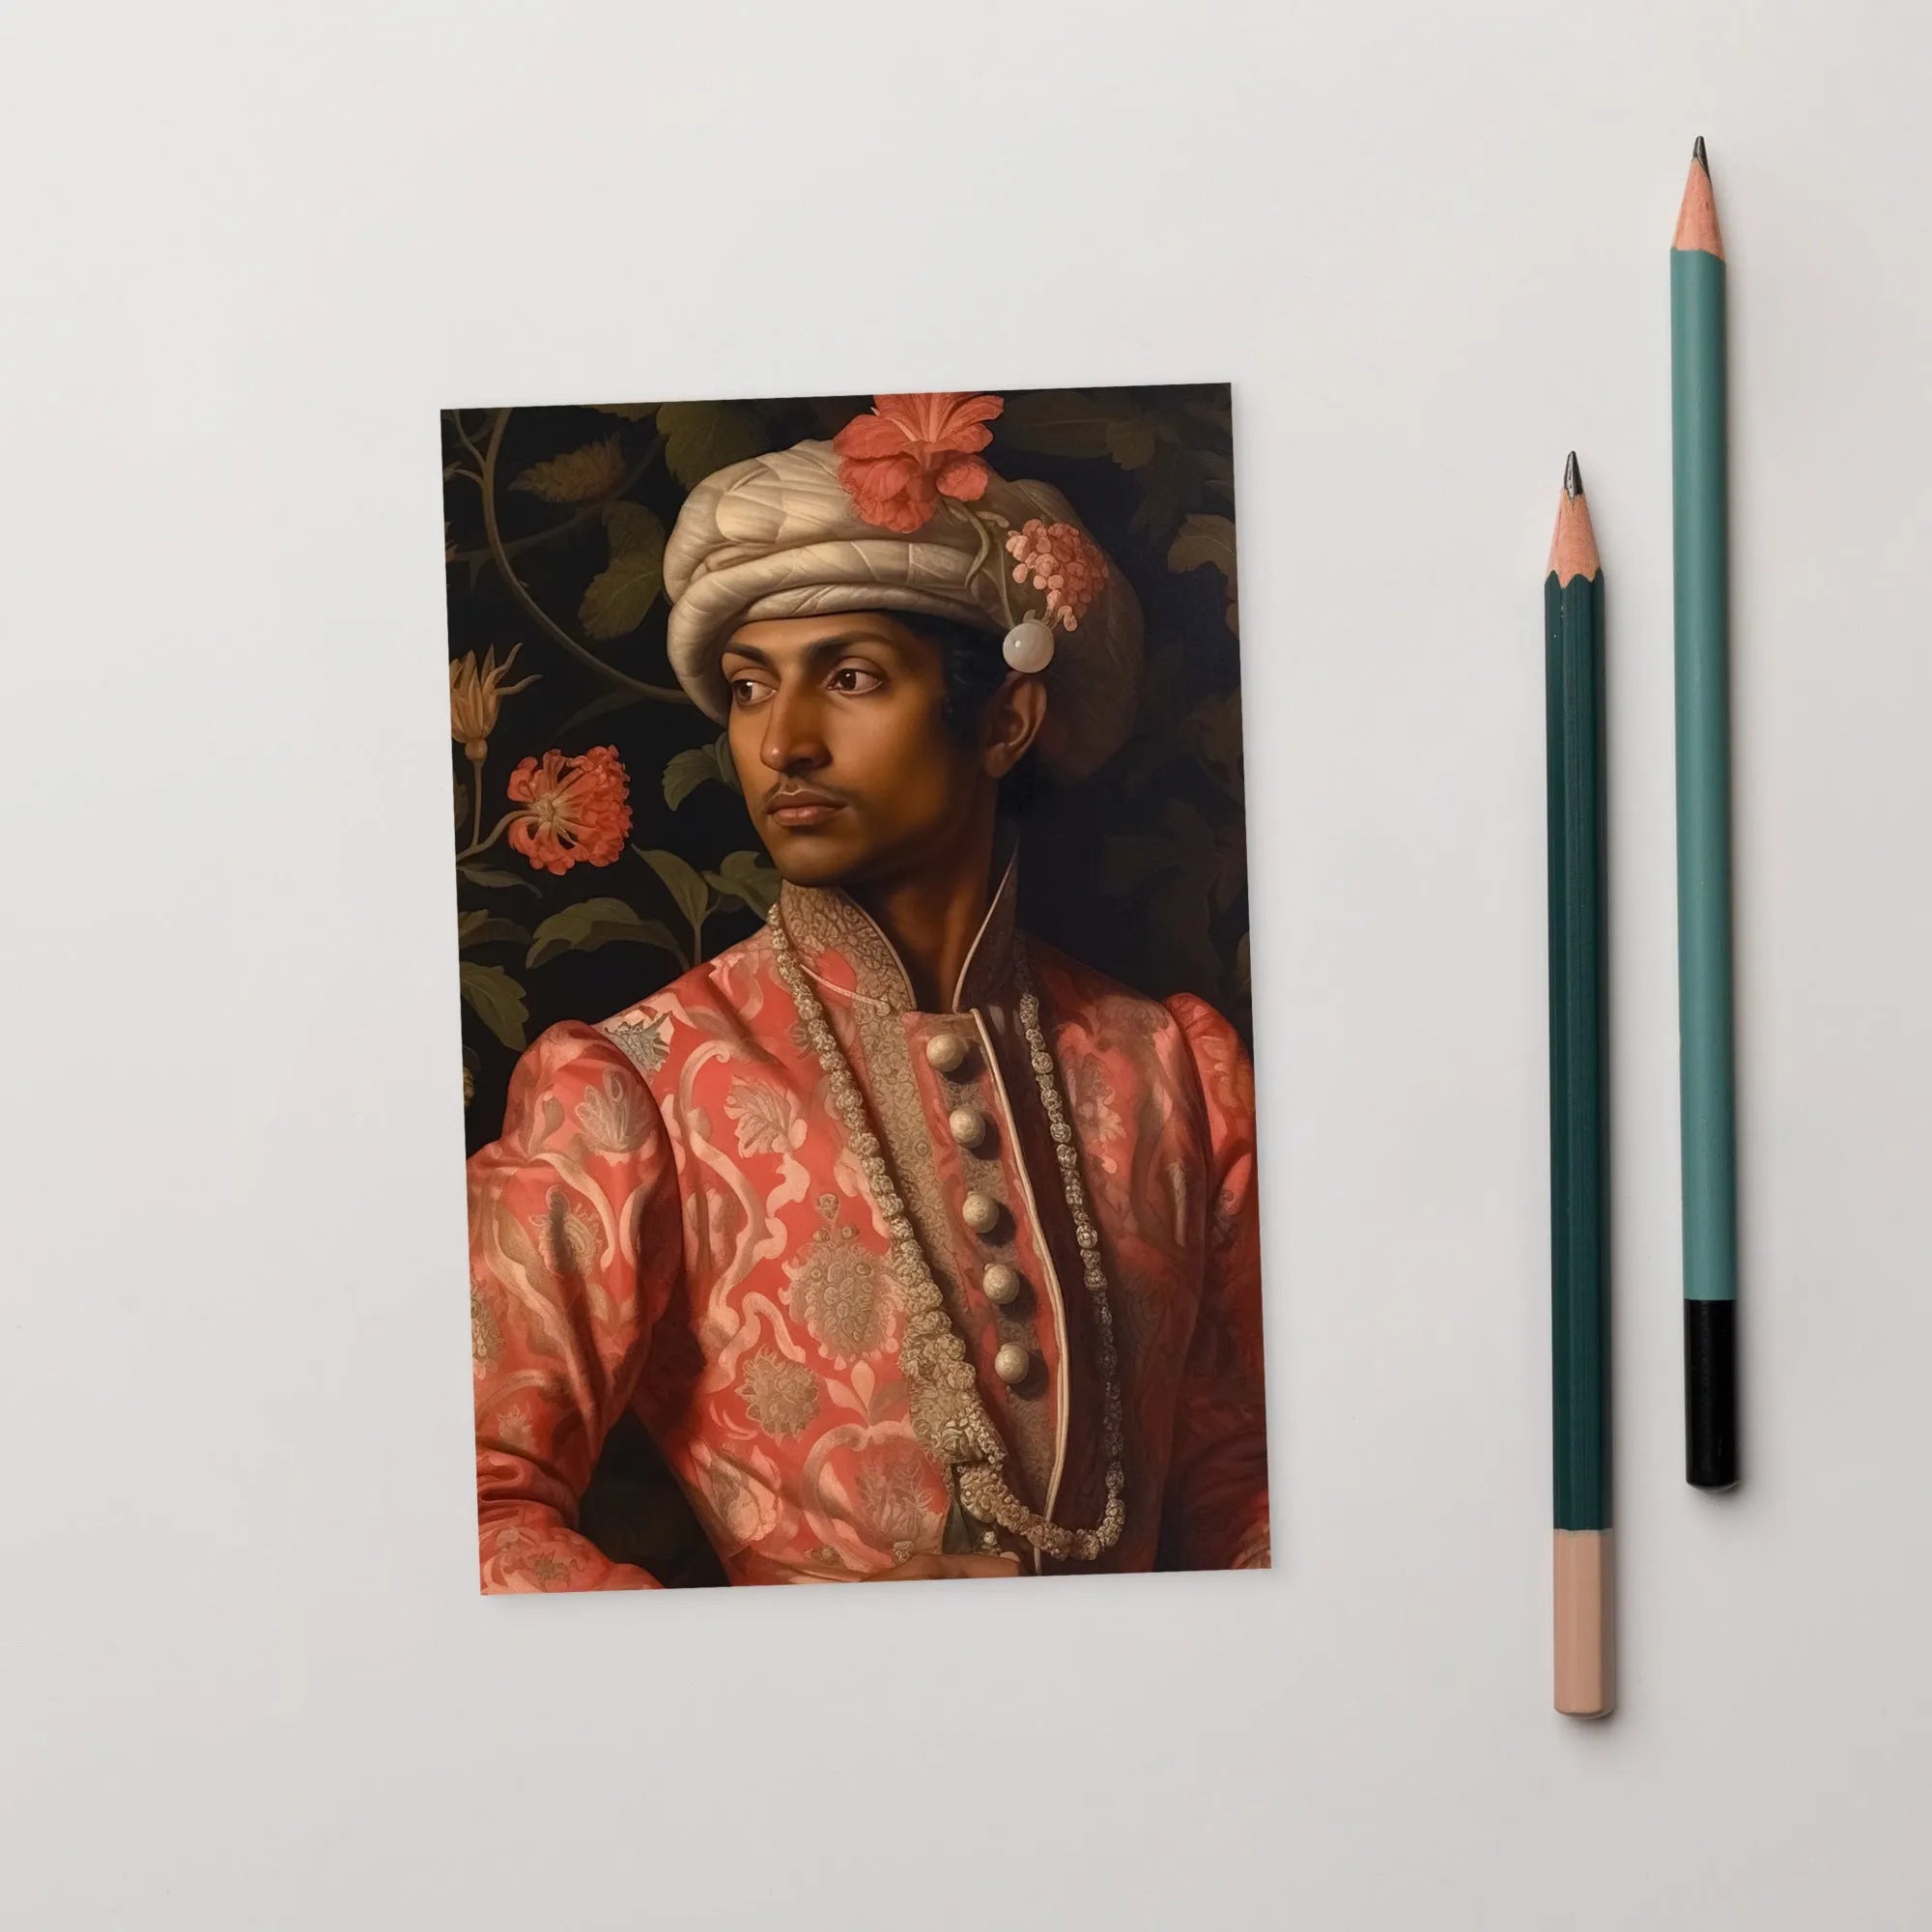 Prince Kaniyan - Gay India Tamil Royalty Queerart Print - 4’x6’ - Posters Prints & Visual Artwork - Aesthetic Art